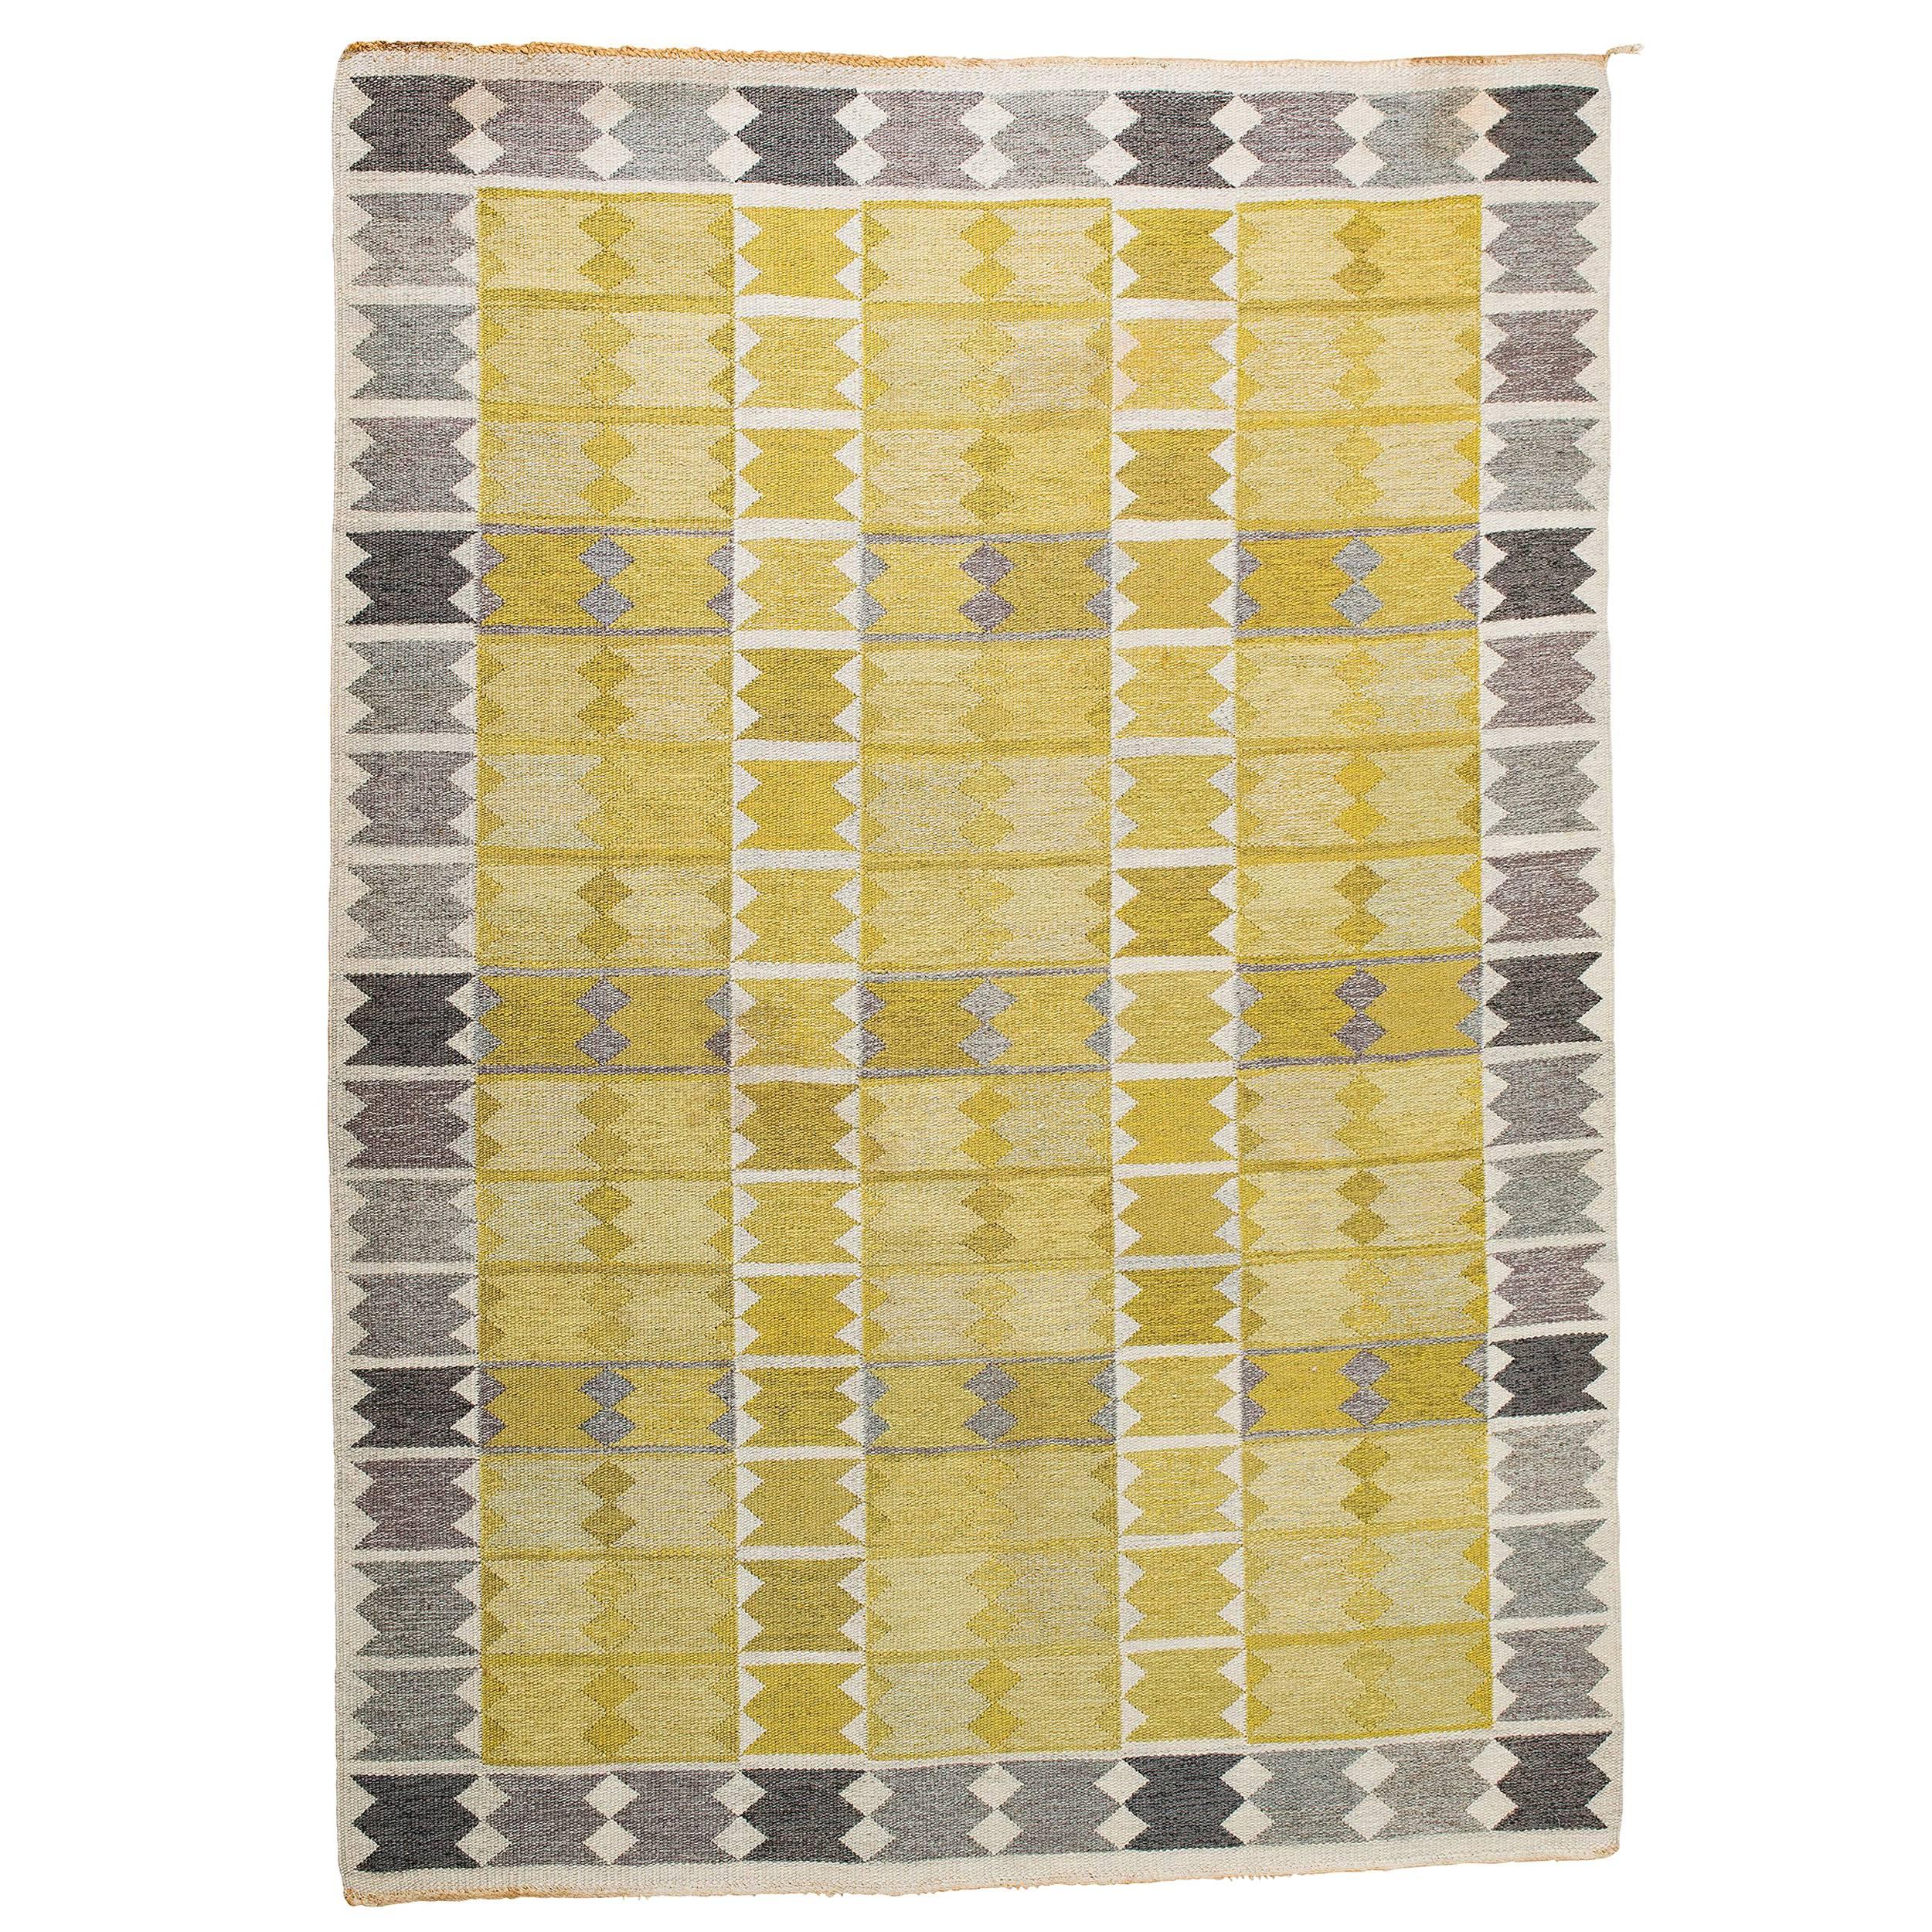 Vintage Ingrid Dessau Flat-Weave Swedish Carpet